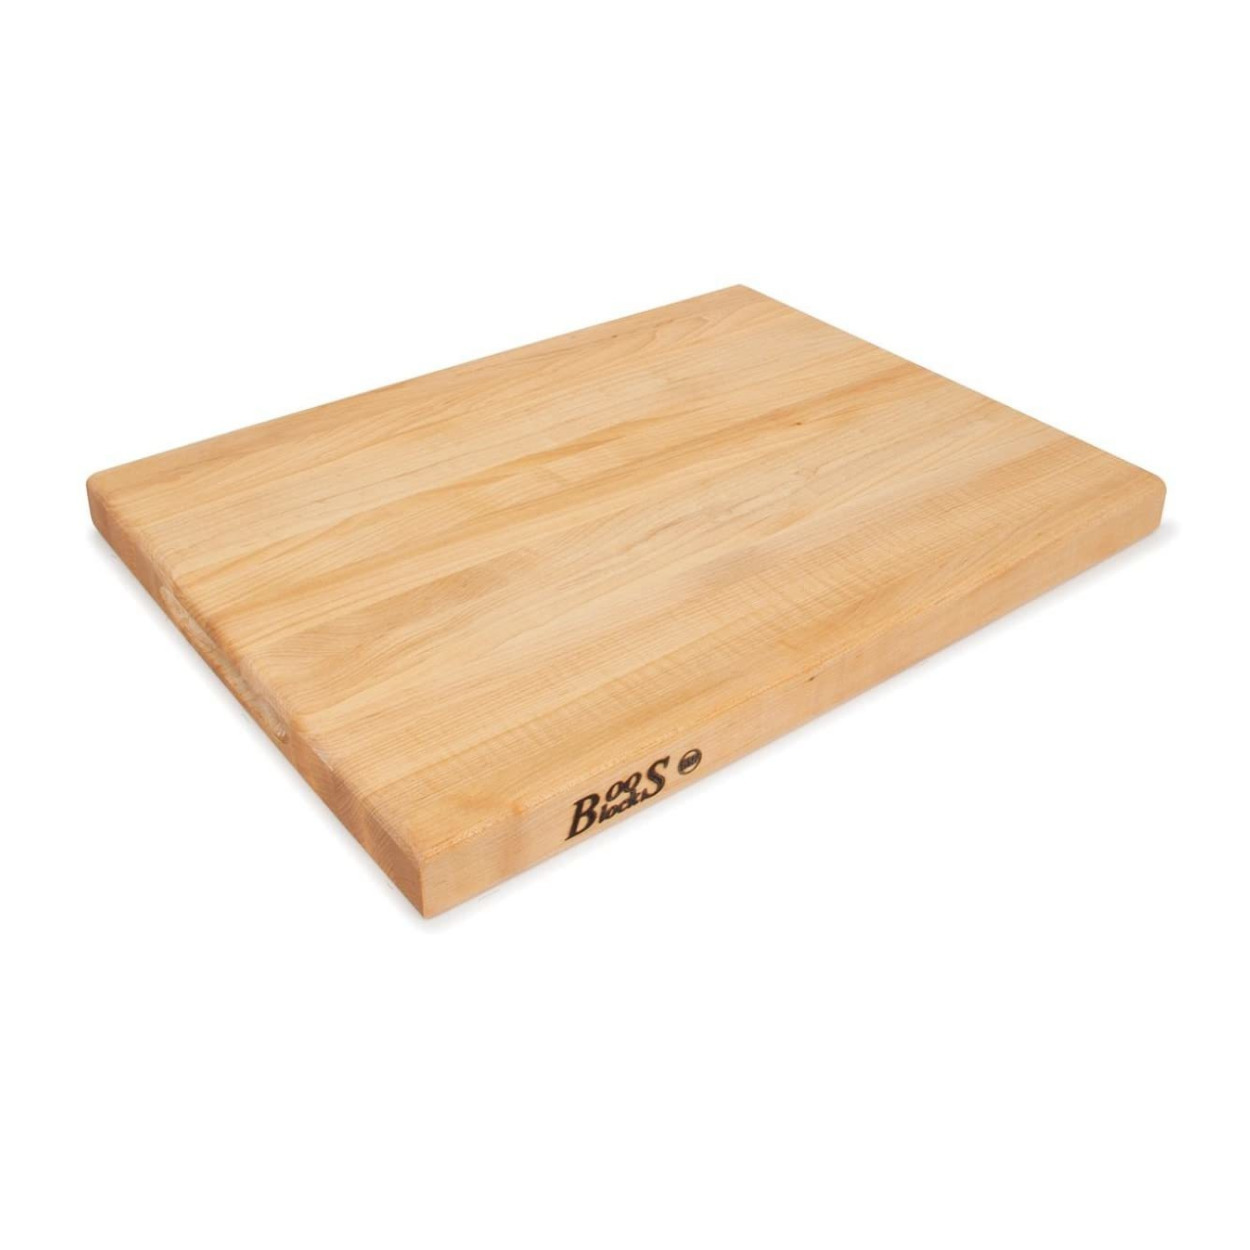 John Boos R03 Maple Wood Edge Grain Reversible Cutting Board